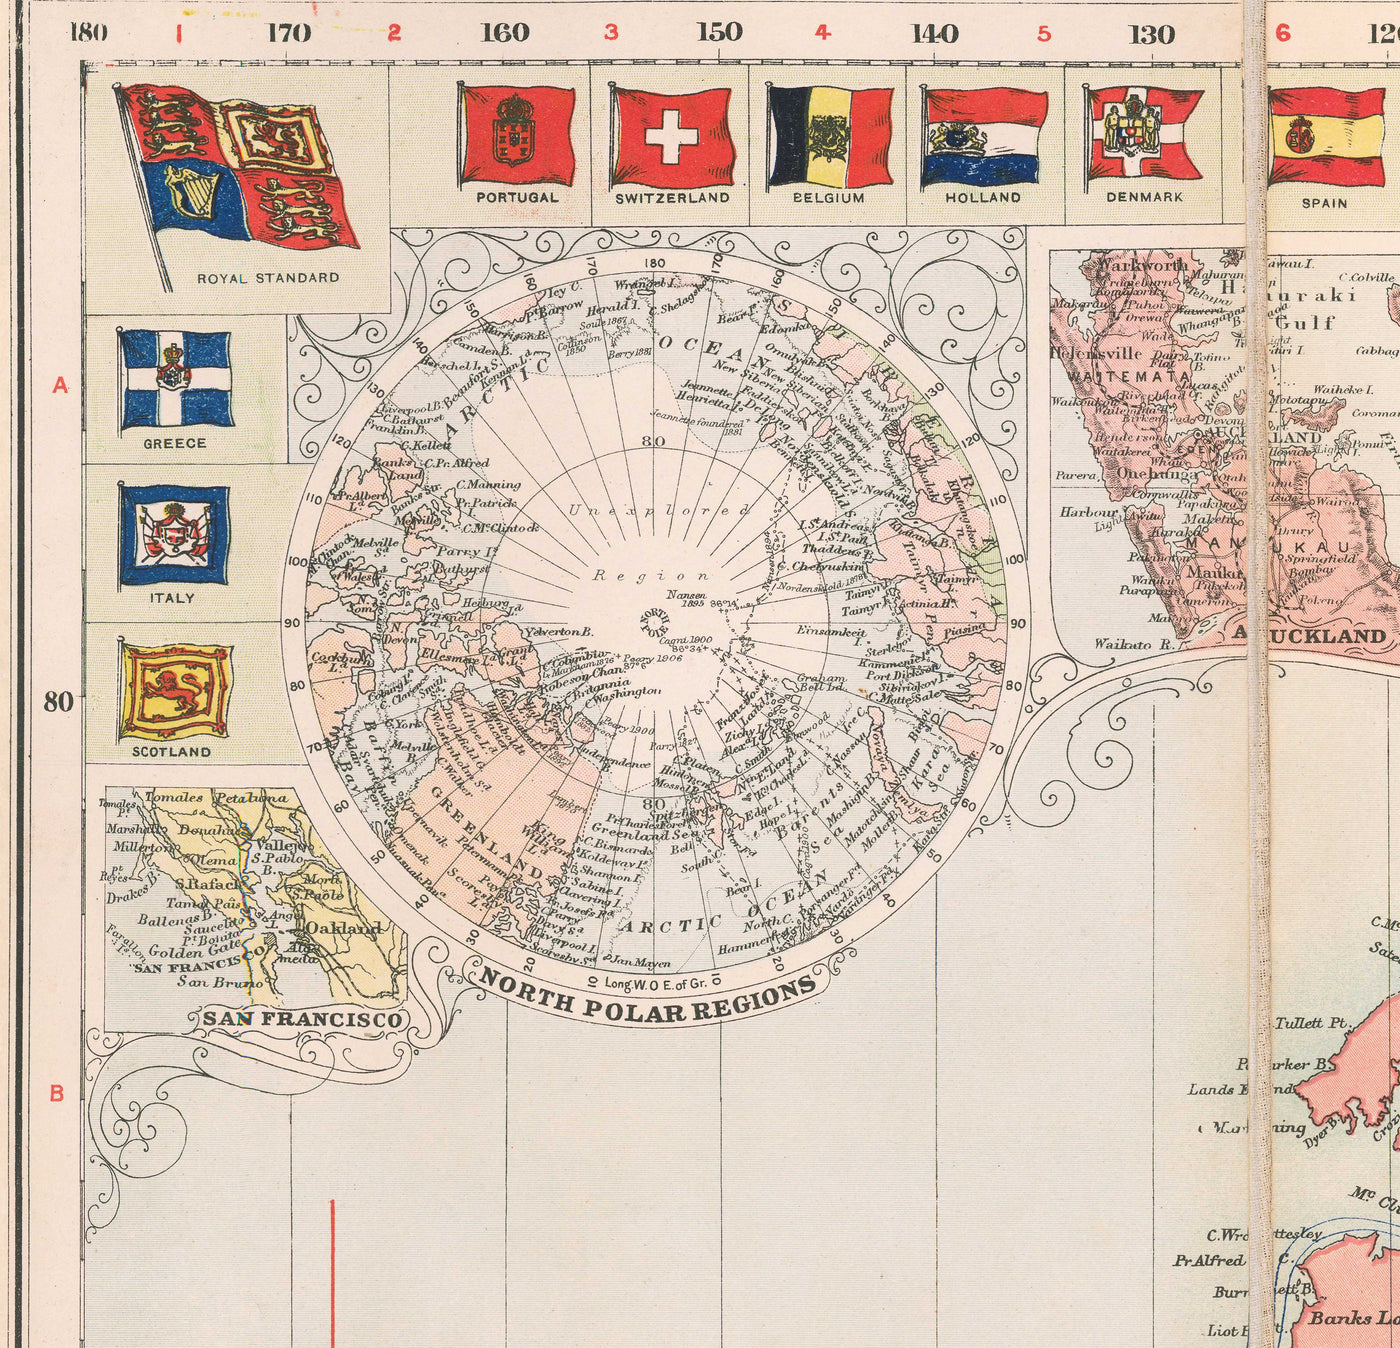 Old World Map by Bacon, 1908 - Large Rare Atlas - Shipping Lanes, Merchant Navy, Railways, British Empire